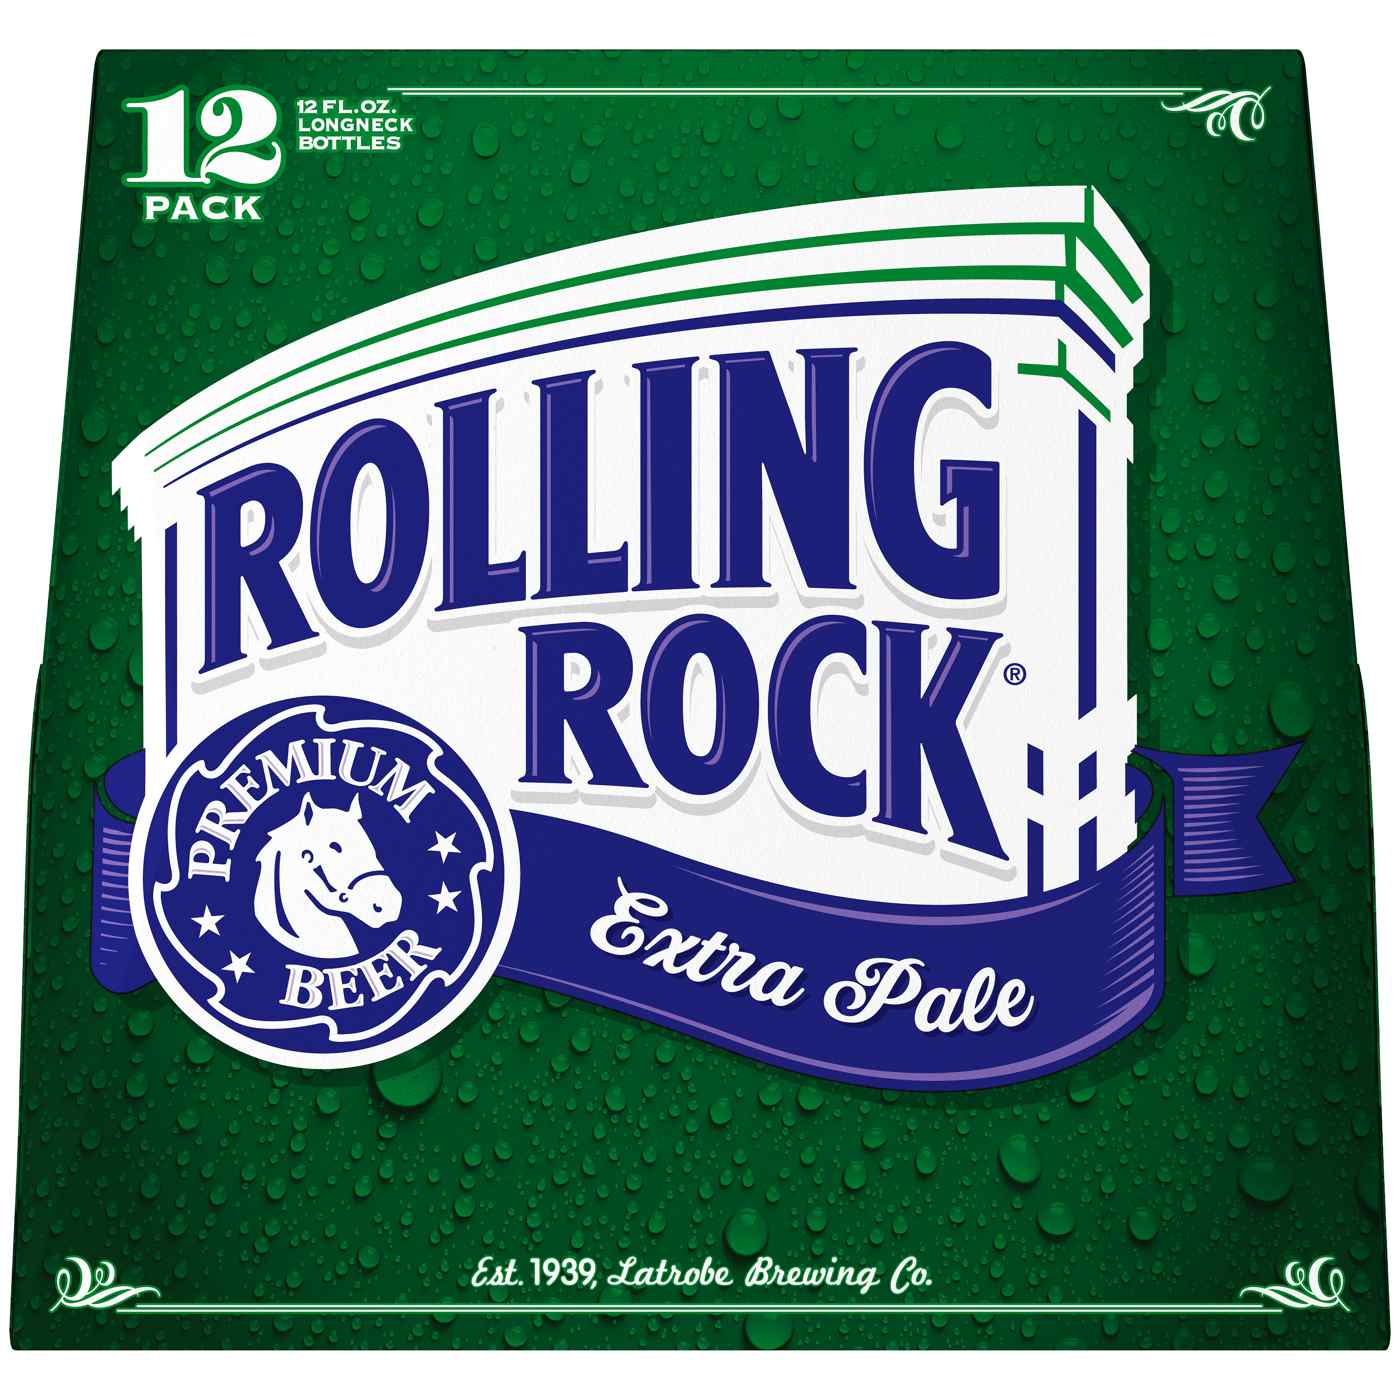 Rolling Rock Premium Extra Pale Beer 12 pk Bottles; image 2 of 2